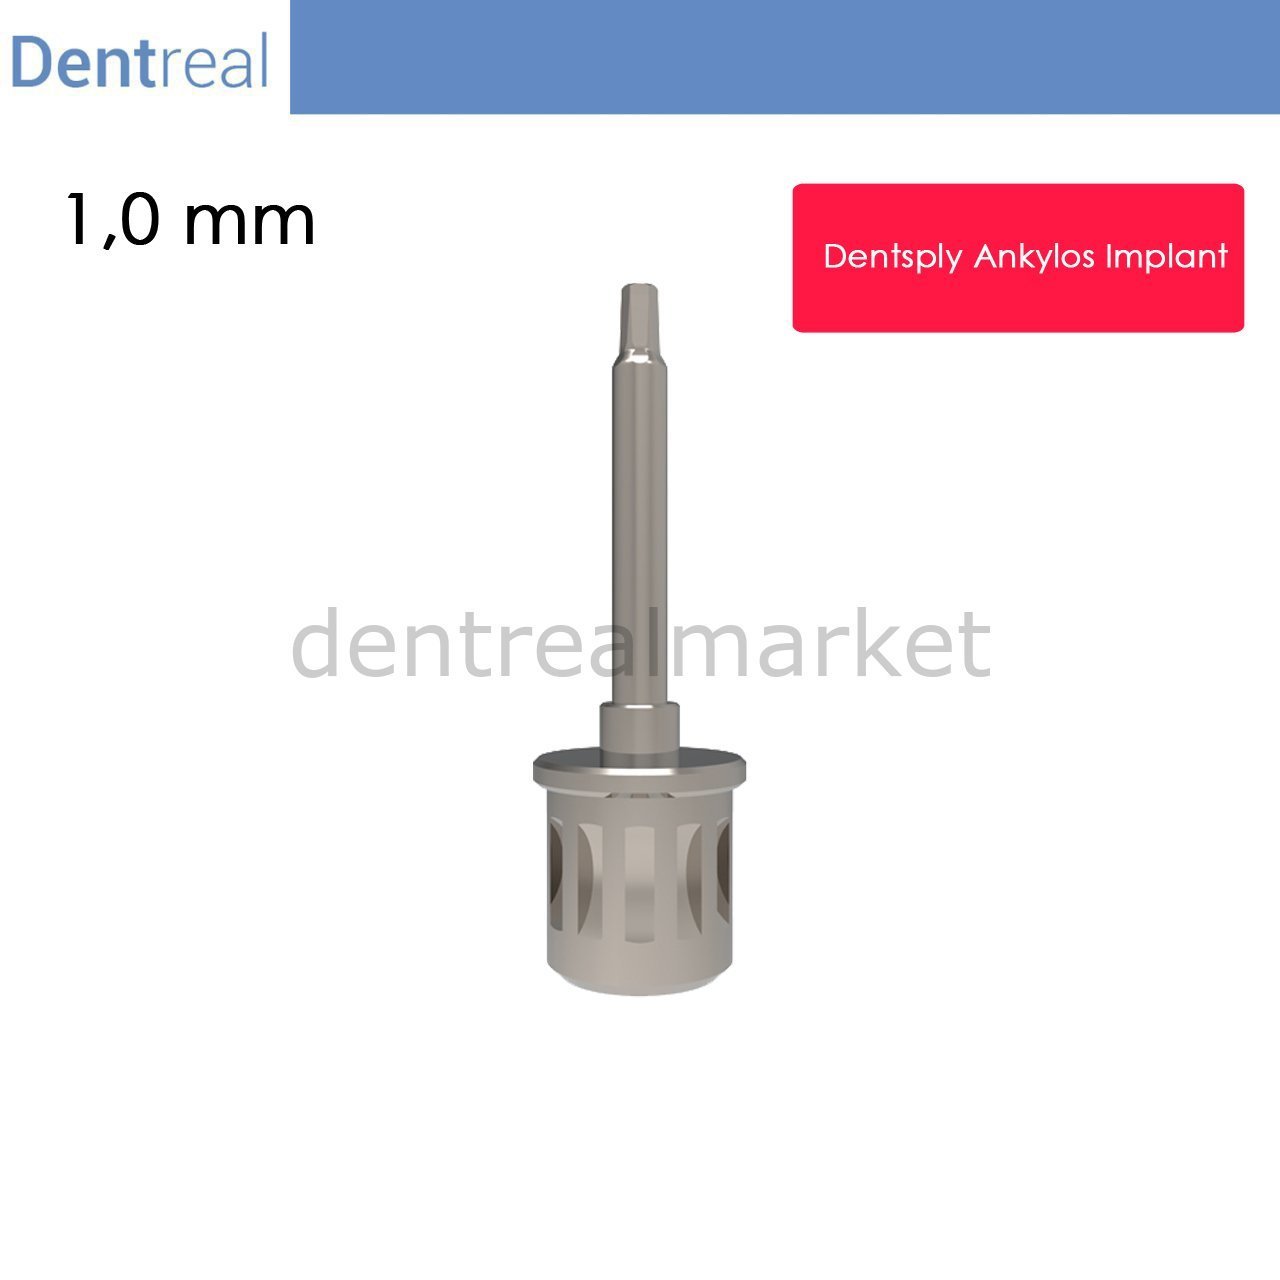 DentrealStore - Dentreal Screwdriver for Ankylos implant - 1,0 mm Hex Driver